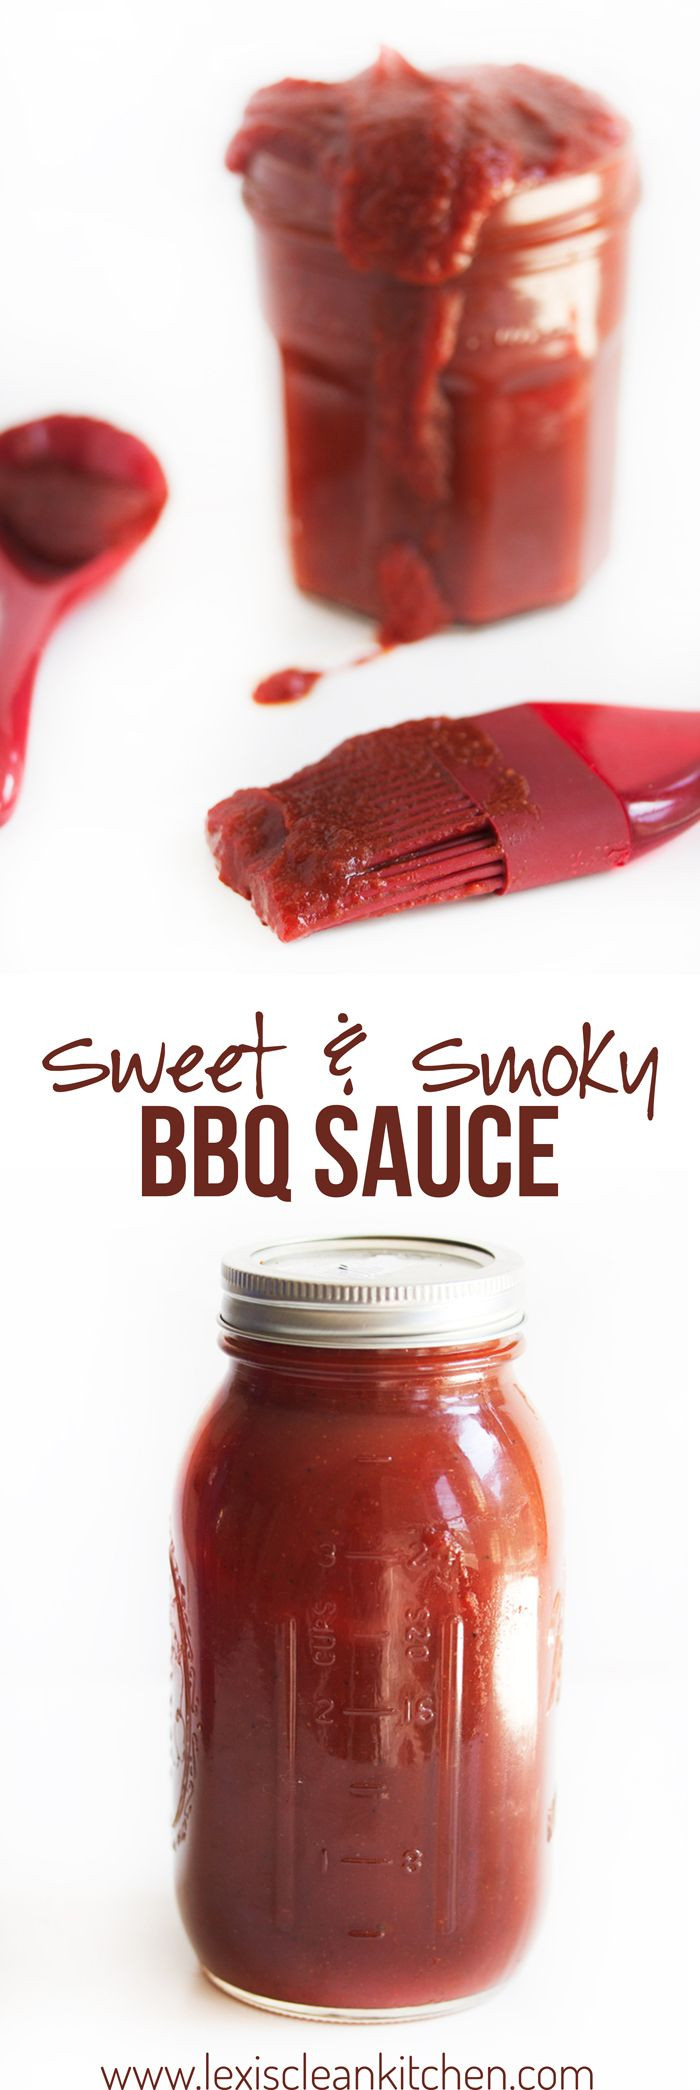 Sweet Bbq Sauce
 Sweet & Smoky BBQ Sauce Recipe